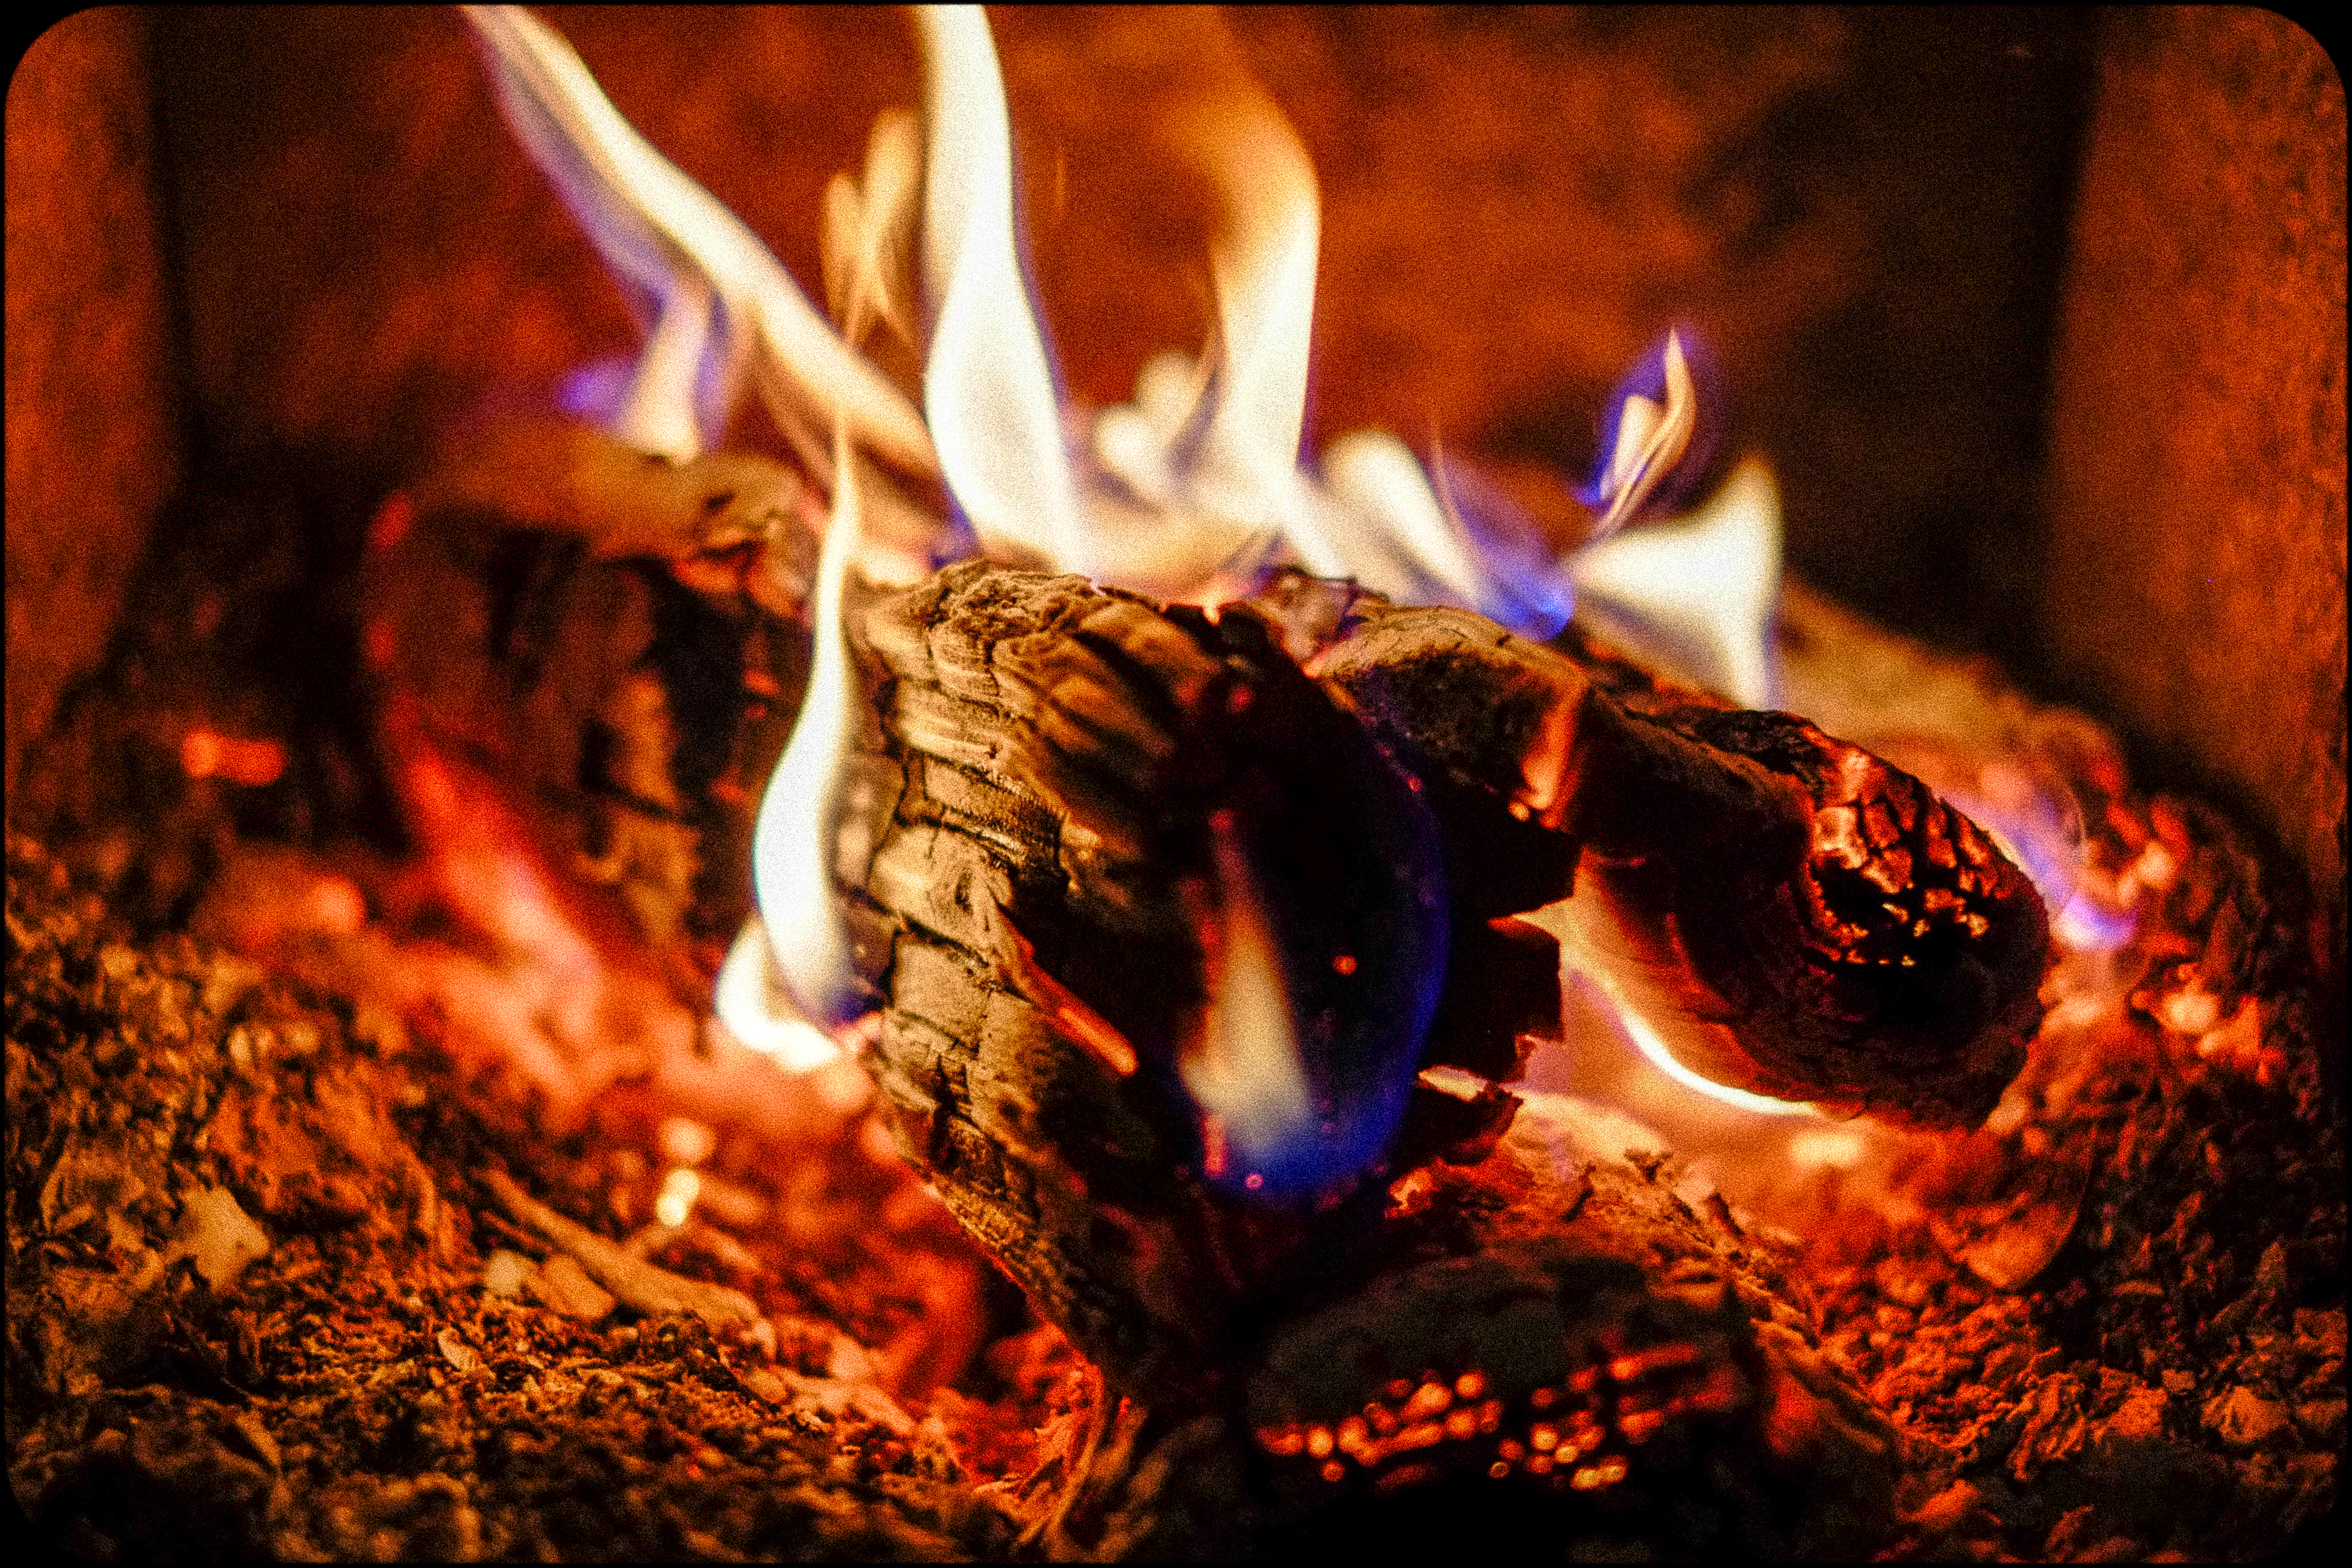 bonfire, coals, flame, miscellanea, miscellaneous, firewood, ash